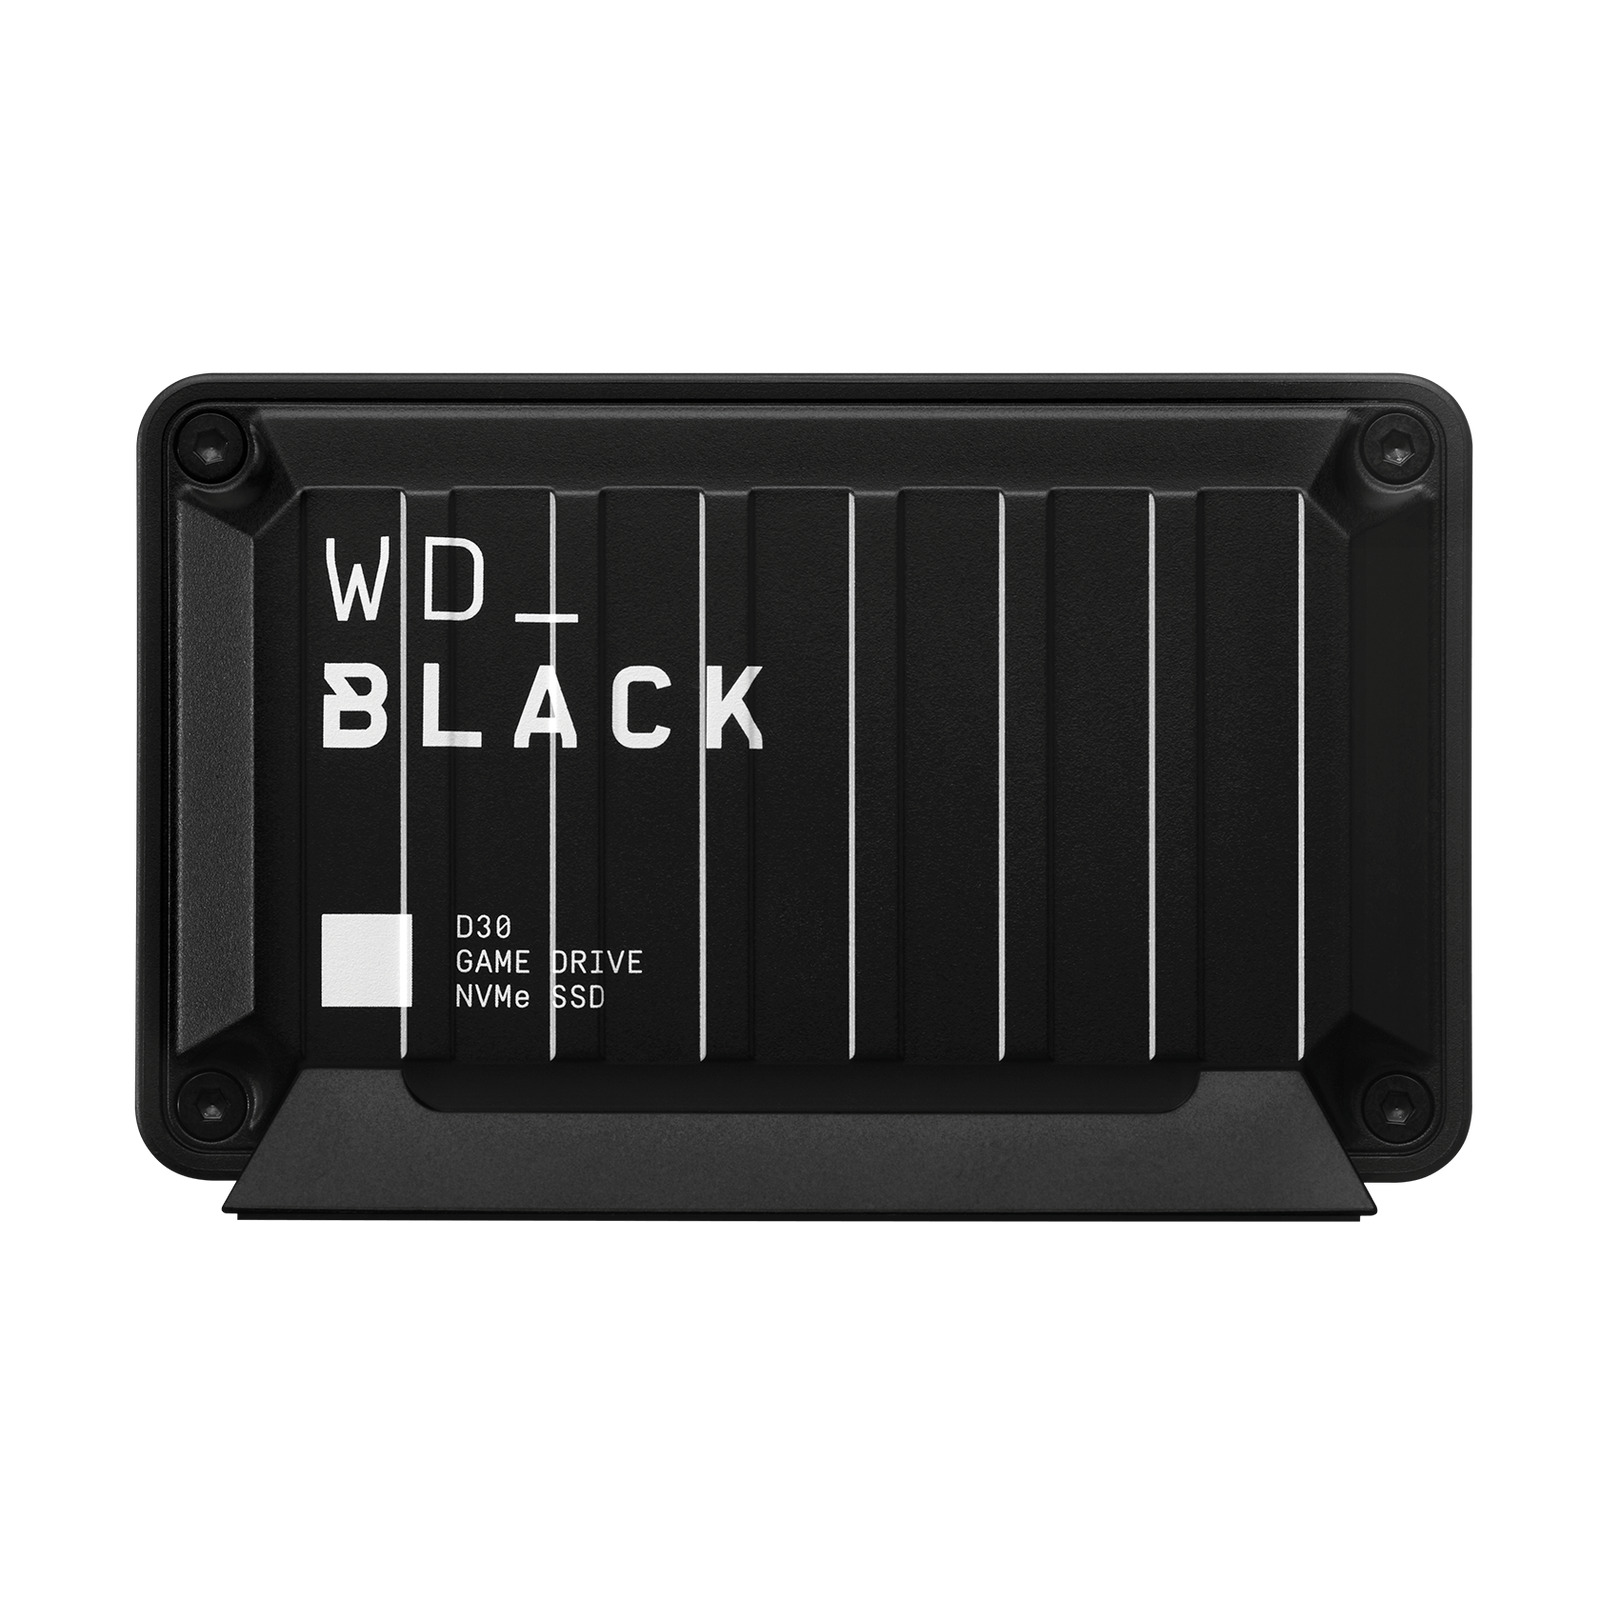 WD_BLACK 1TB D30 Game Drive SSD, External Solid State Drive - WDBATL0010BBK-WESN